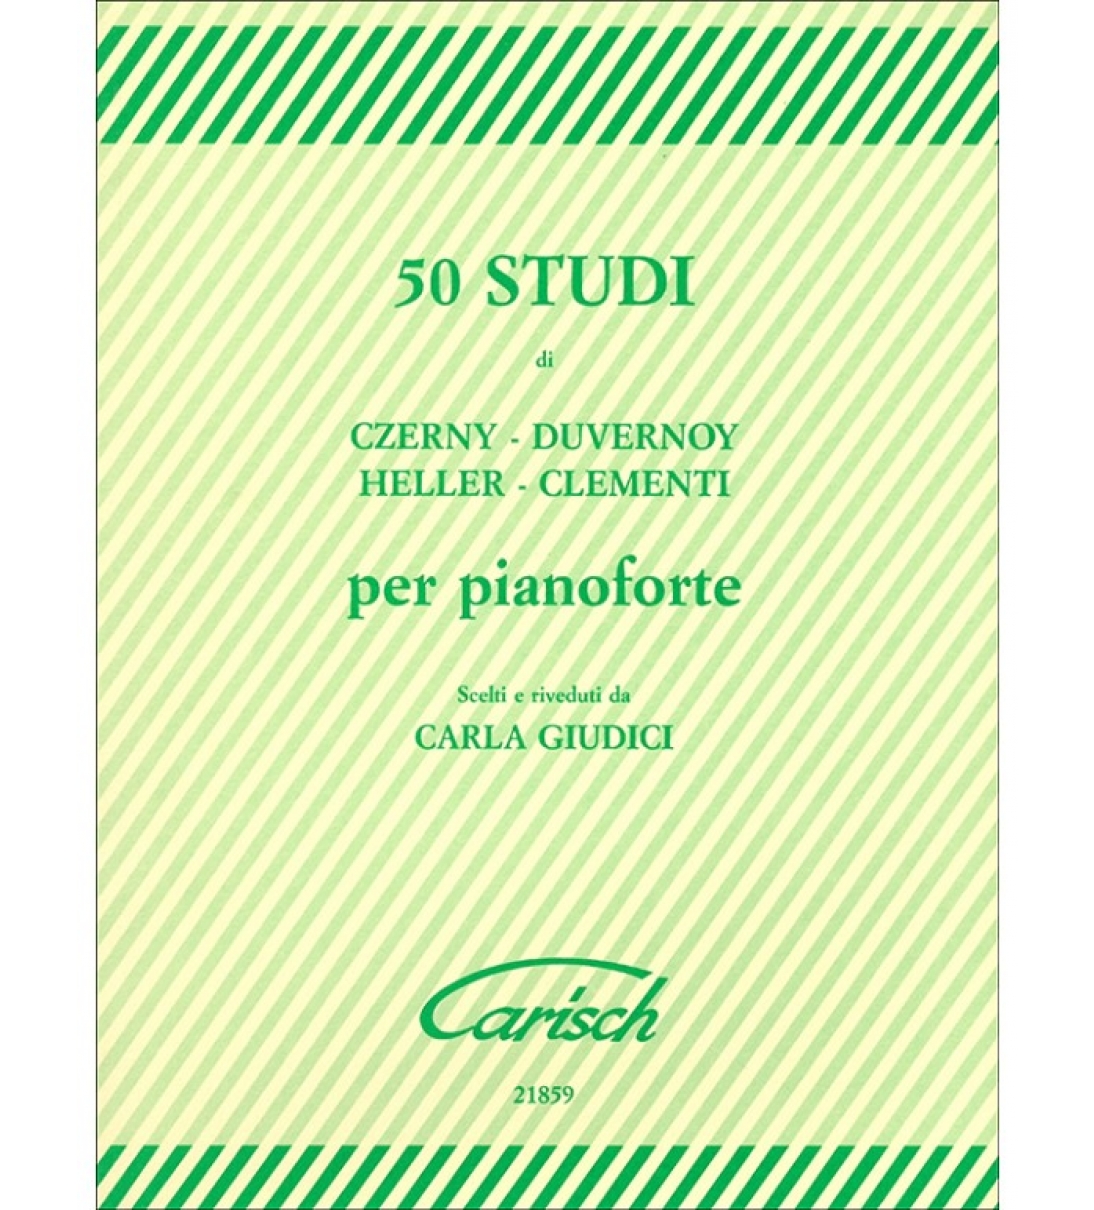 50 STUDI PER PIANOFORTE - CZERNY - DUVERNOY - HELLER - CLEMENTI